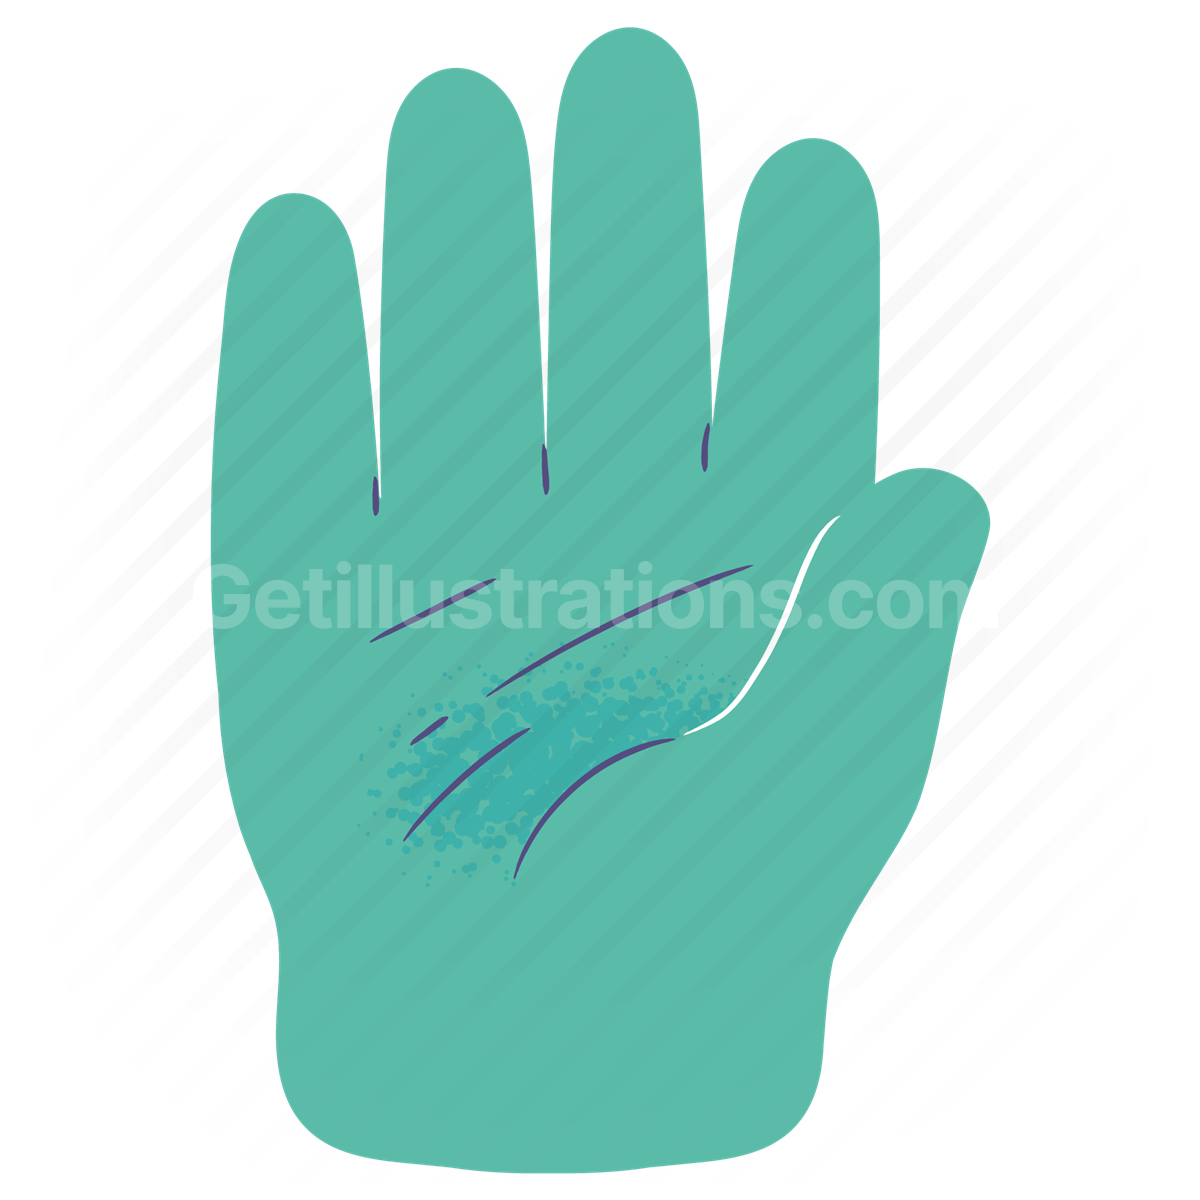 hand gesture, gesture, hand, sign, language, letters, alphabet, palm